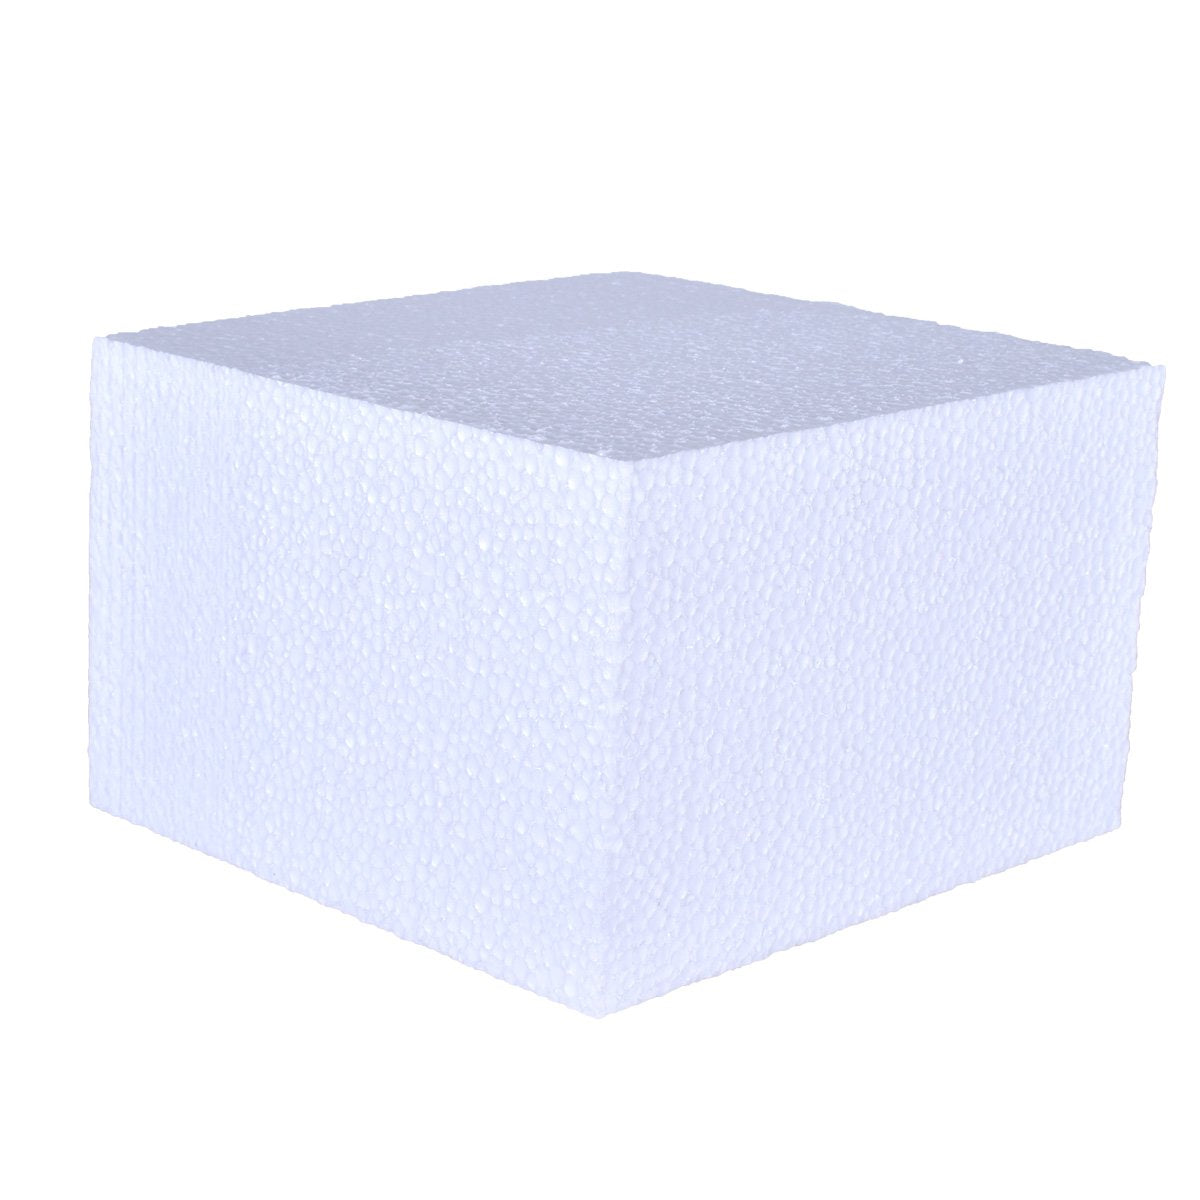 Foam Cake Dummies - 8x8x4 Square